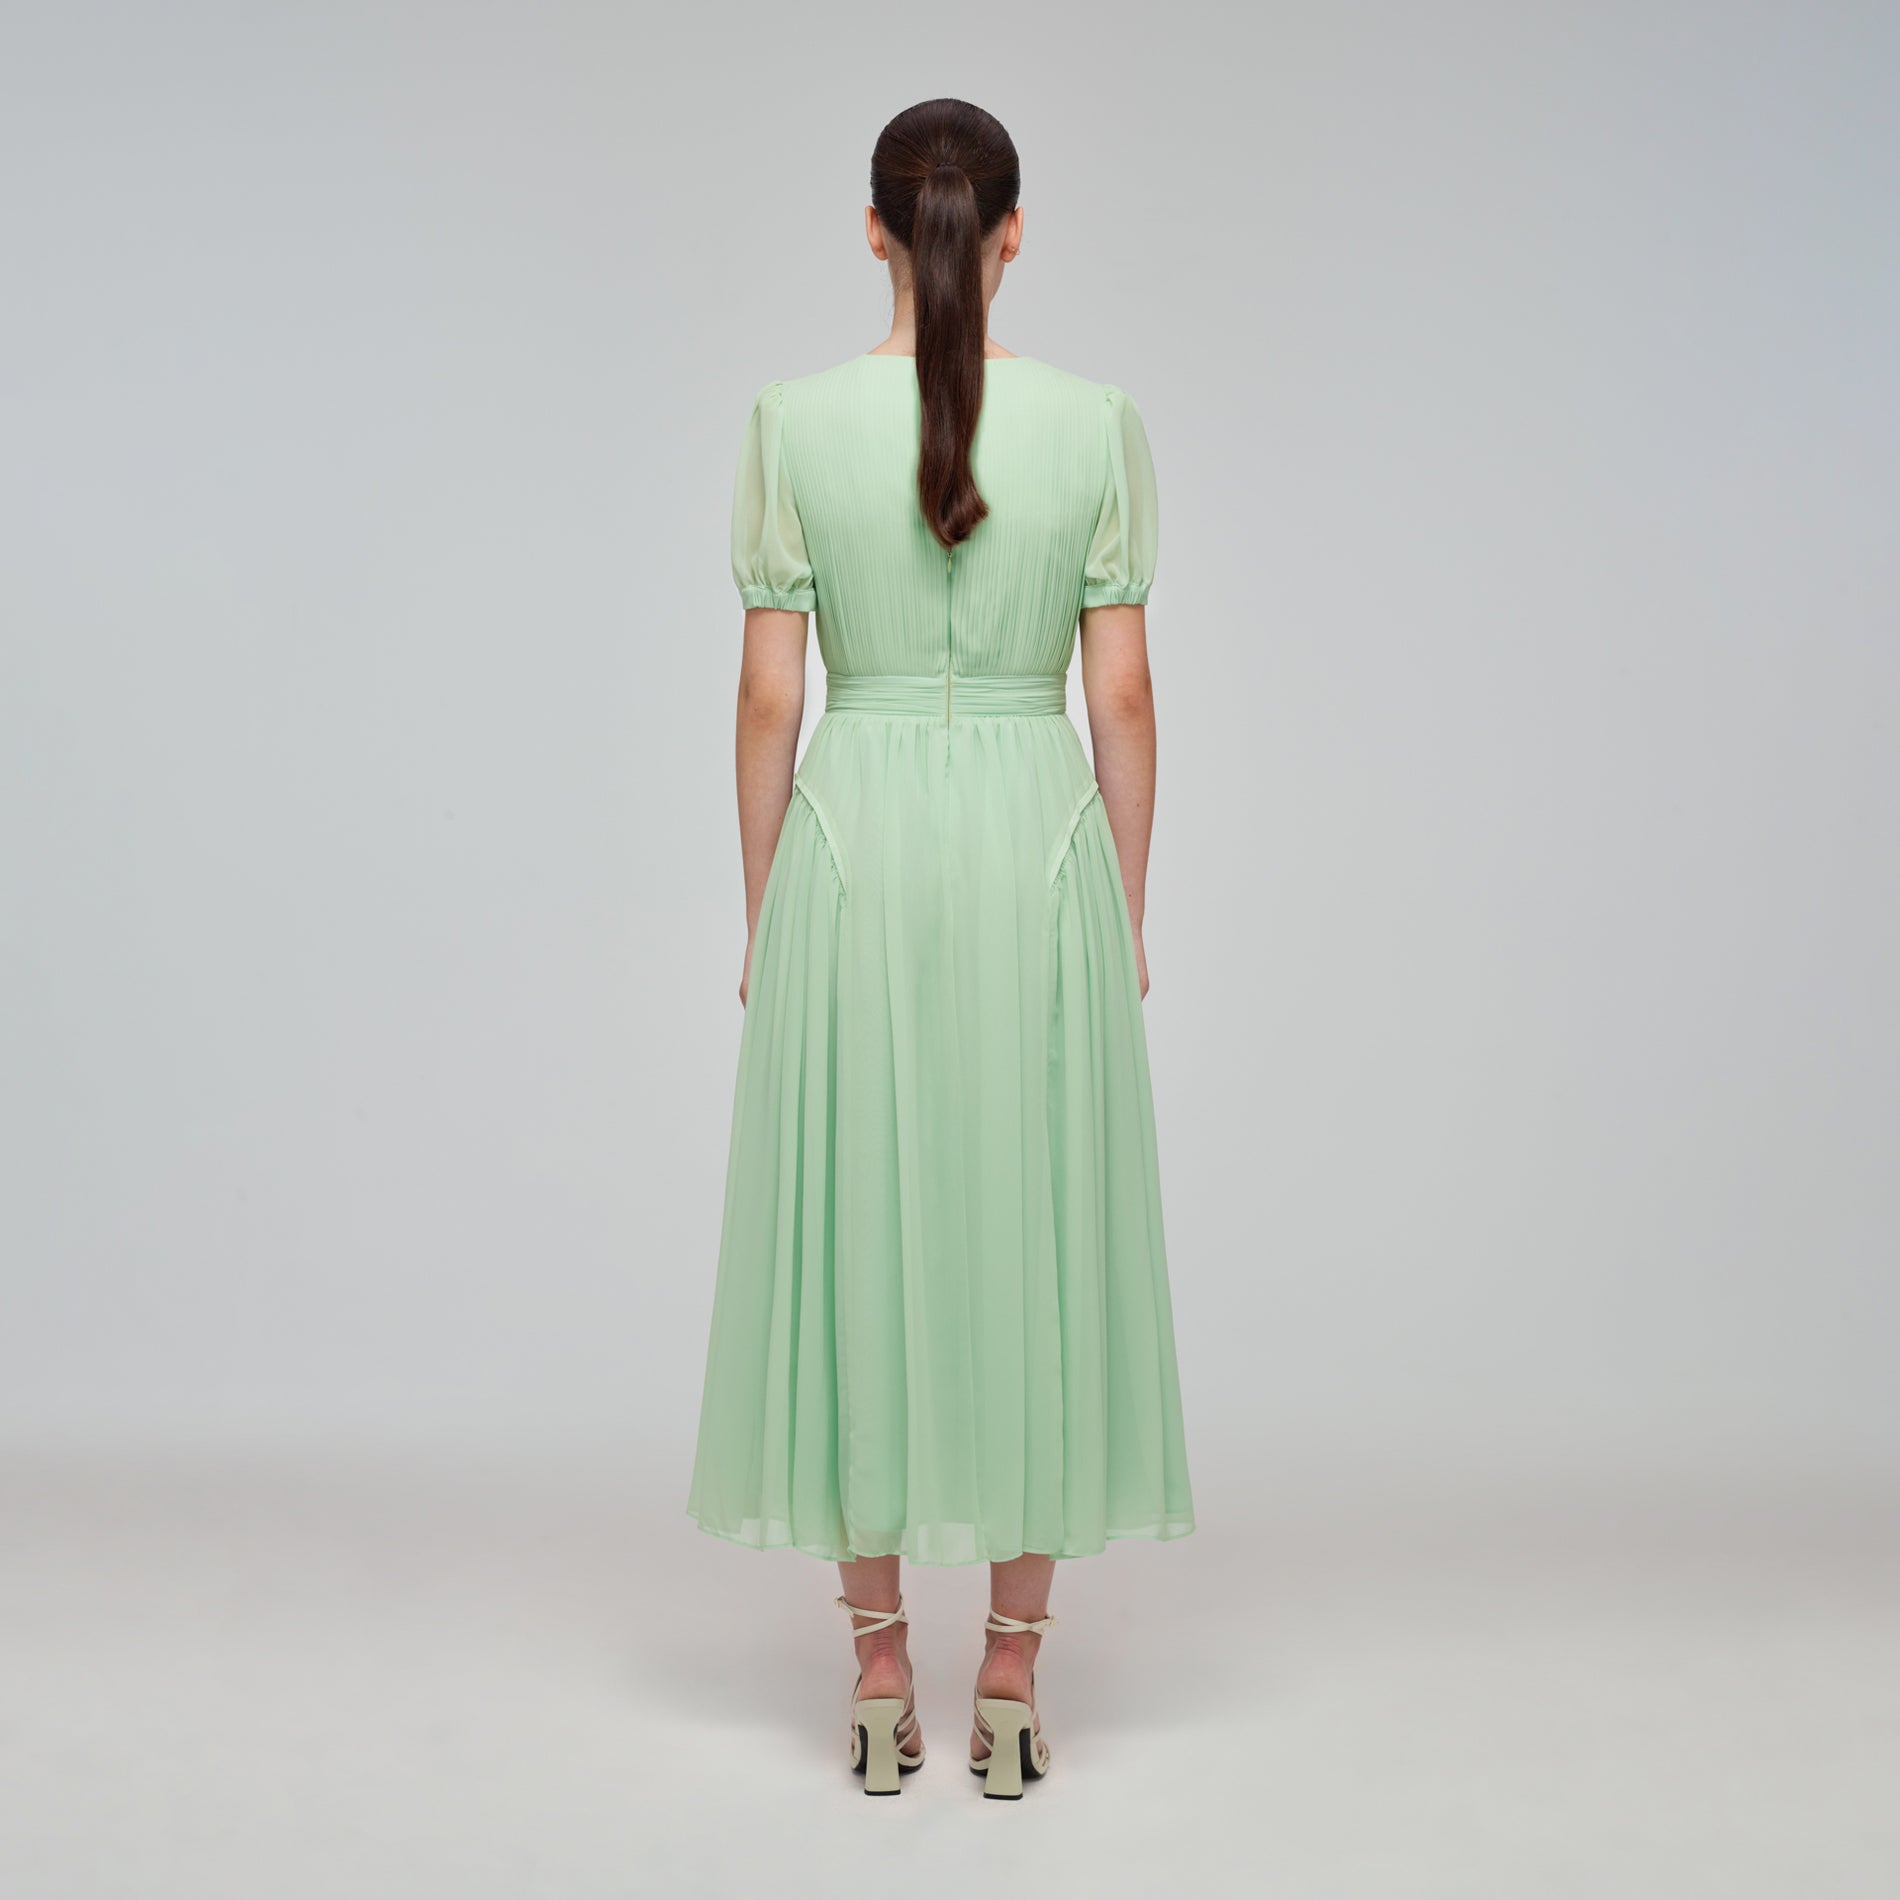 A woman wearing the Spearmint Chiffon Midi Dress